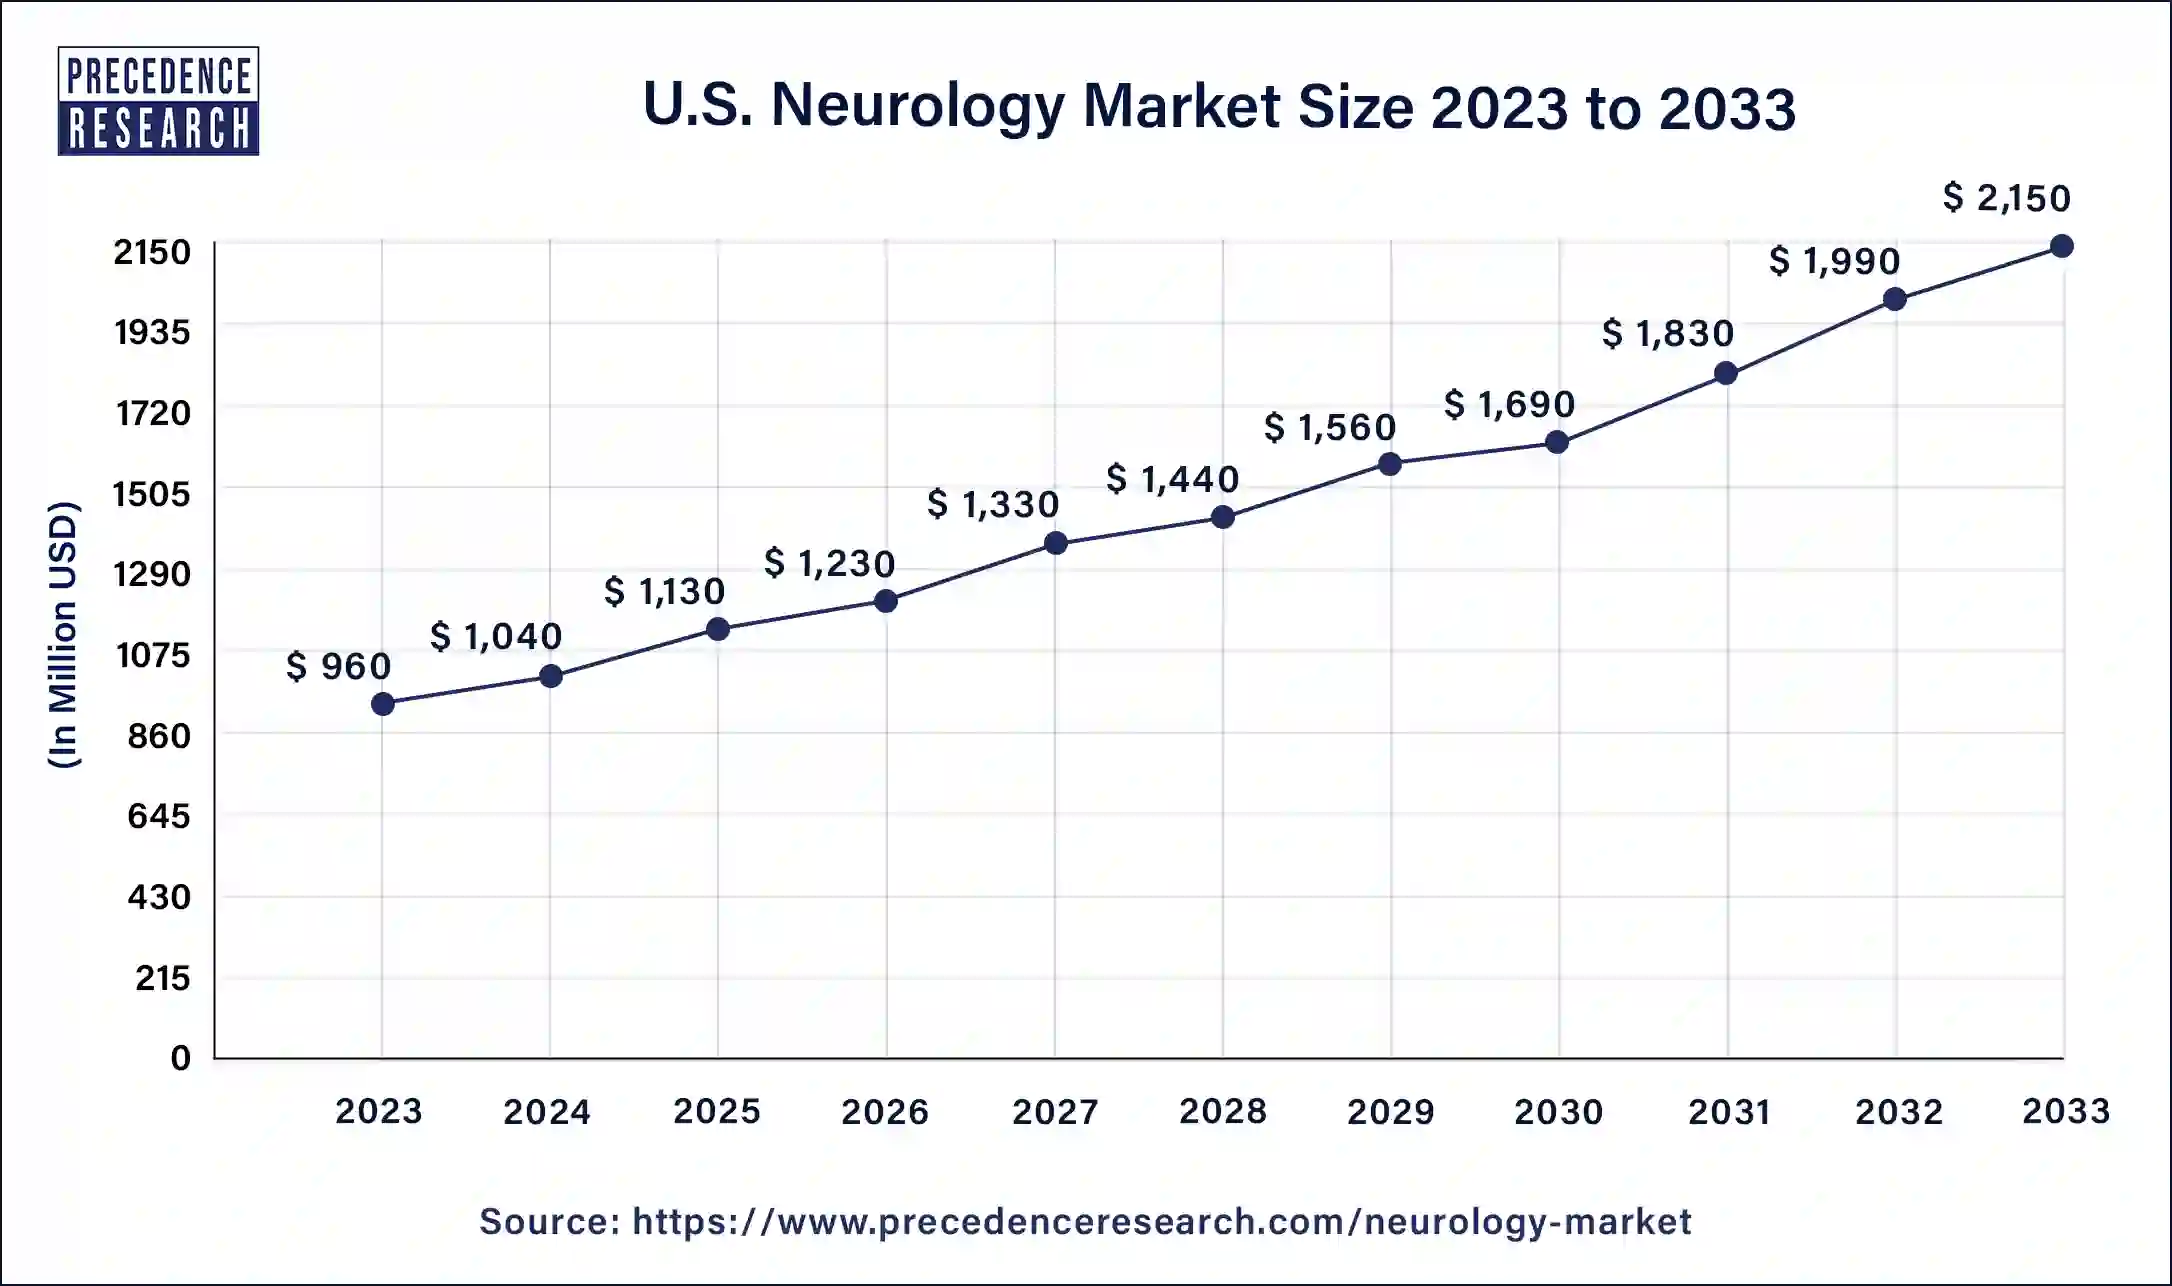 U.S. Neurology Market Size 2024 to 2033